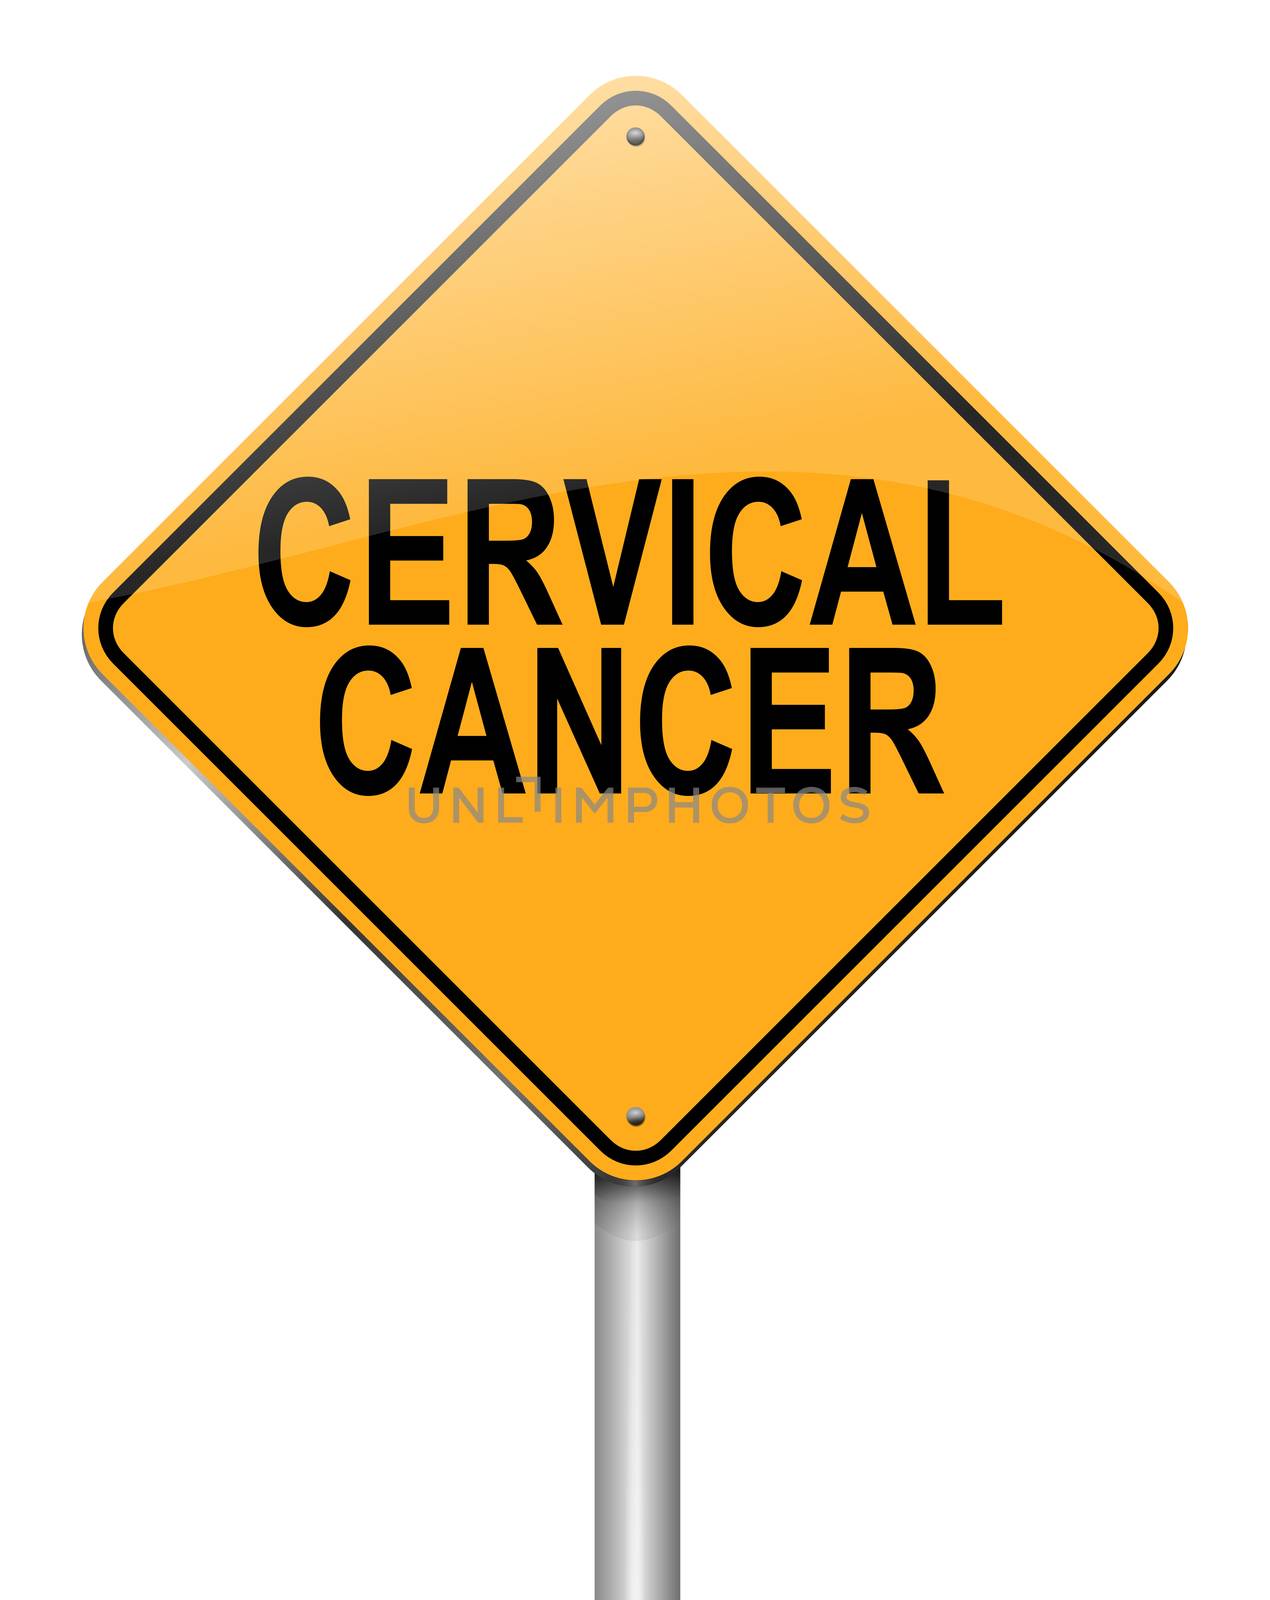 Illustration depicting a sign with a cervical cancer concept.